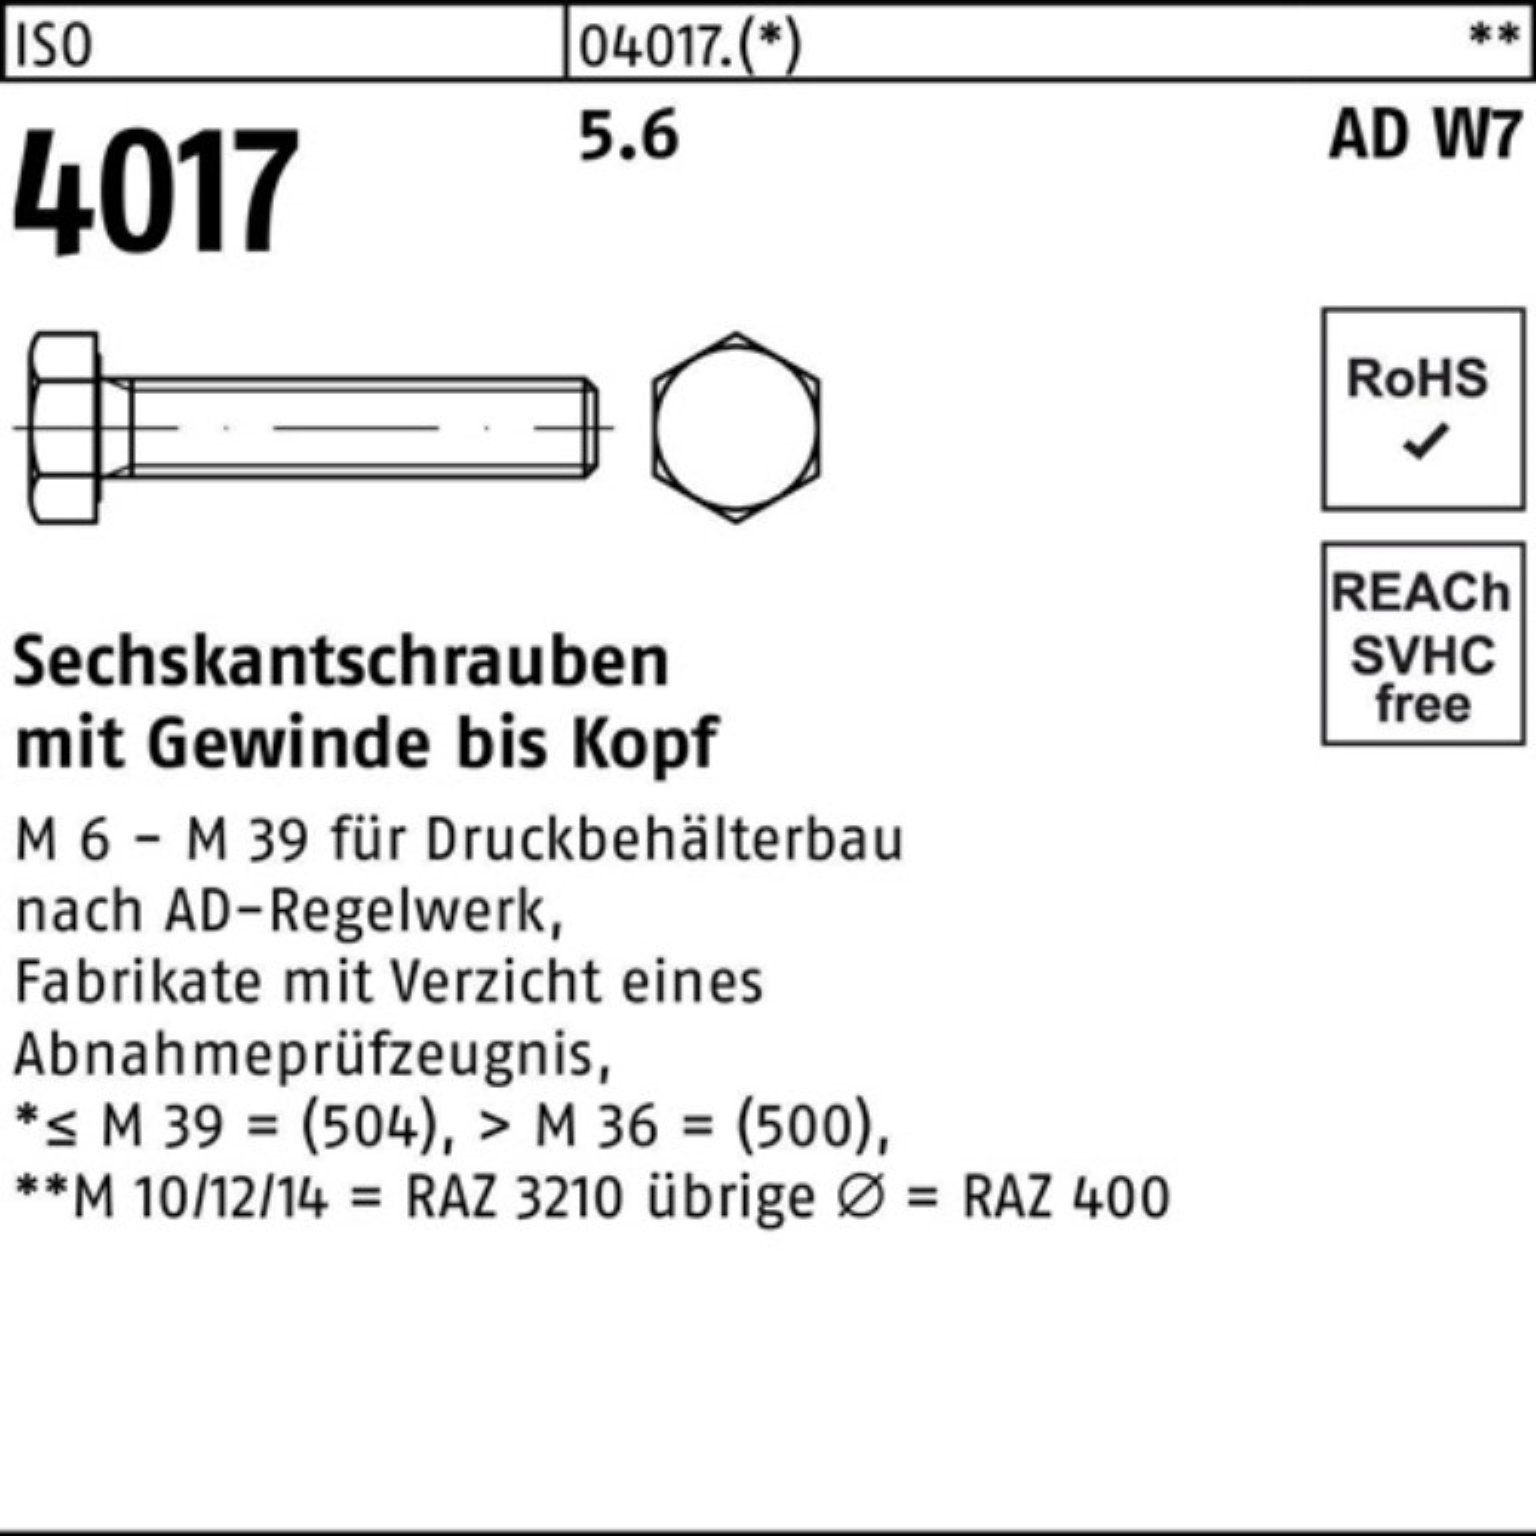 Sechskantschraube 100er 25 VG 5.6 W7 Bufab I AD Stück M20x Pack 50 Sechskantschraube 4017 ISO